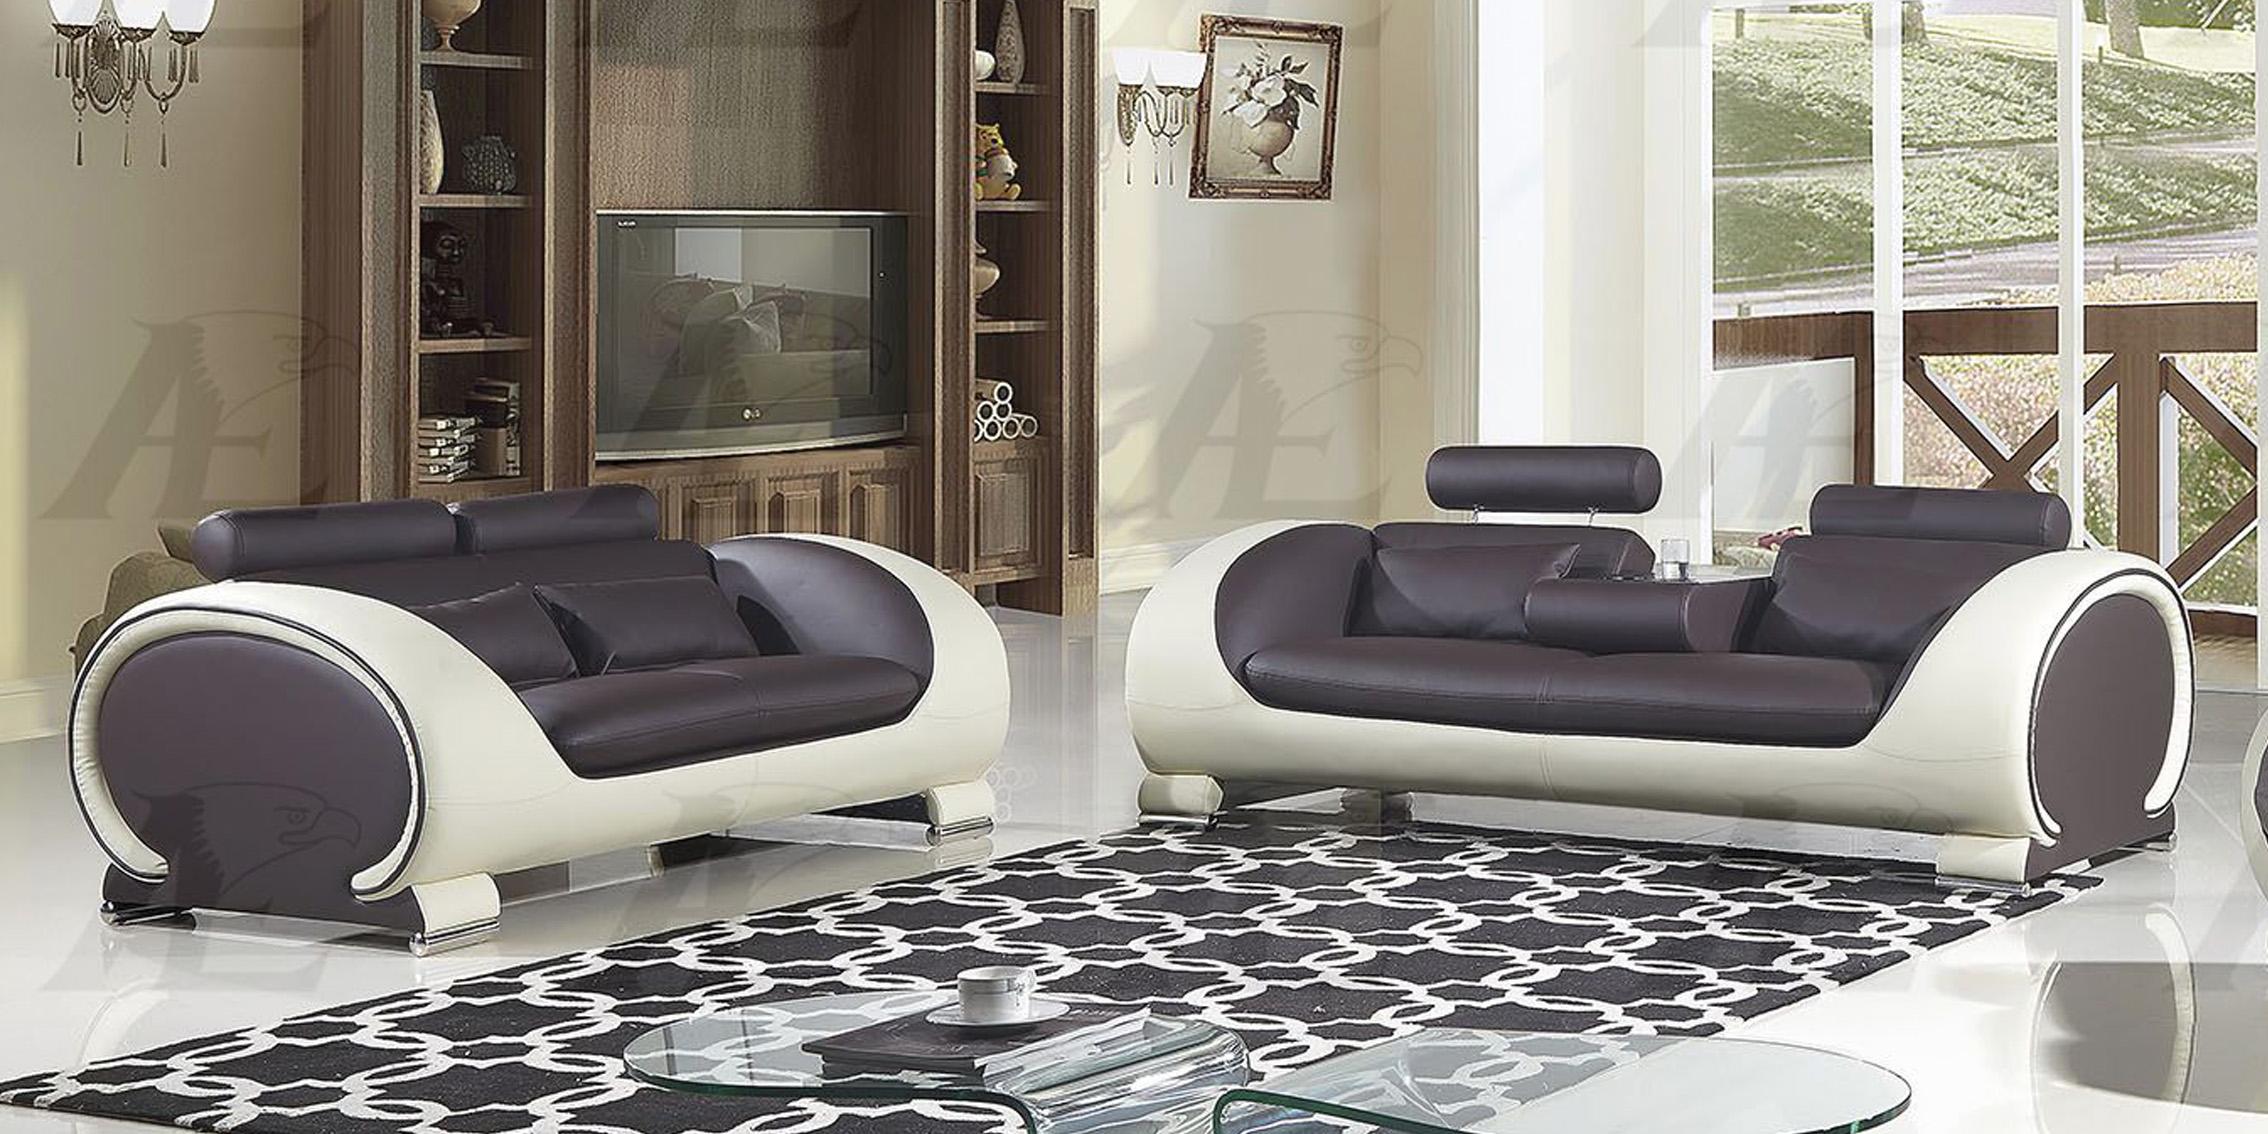 

                    
American Eagle Furniture AE-D802-DC.CRM Sofa Cream/Chocolate Bonded Leather Purchase 
